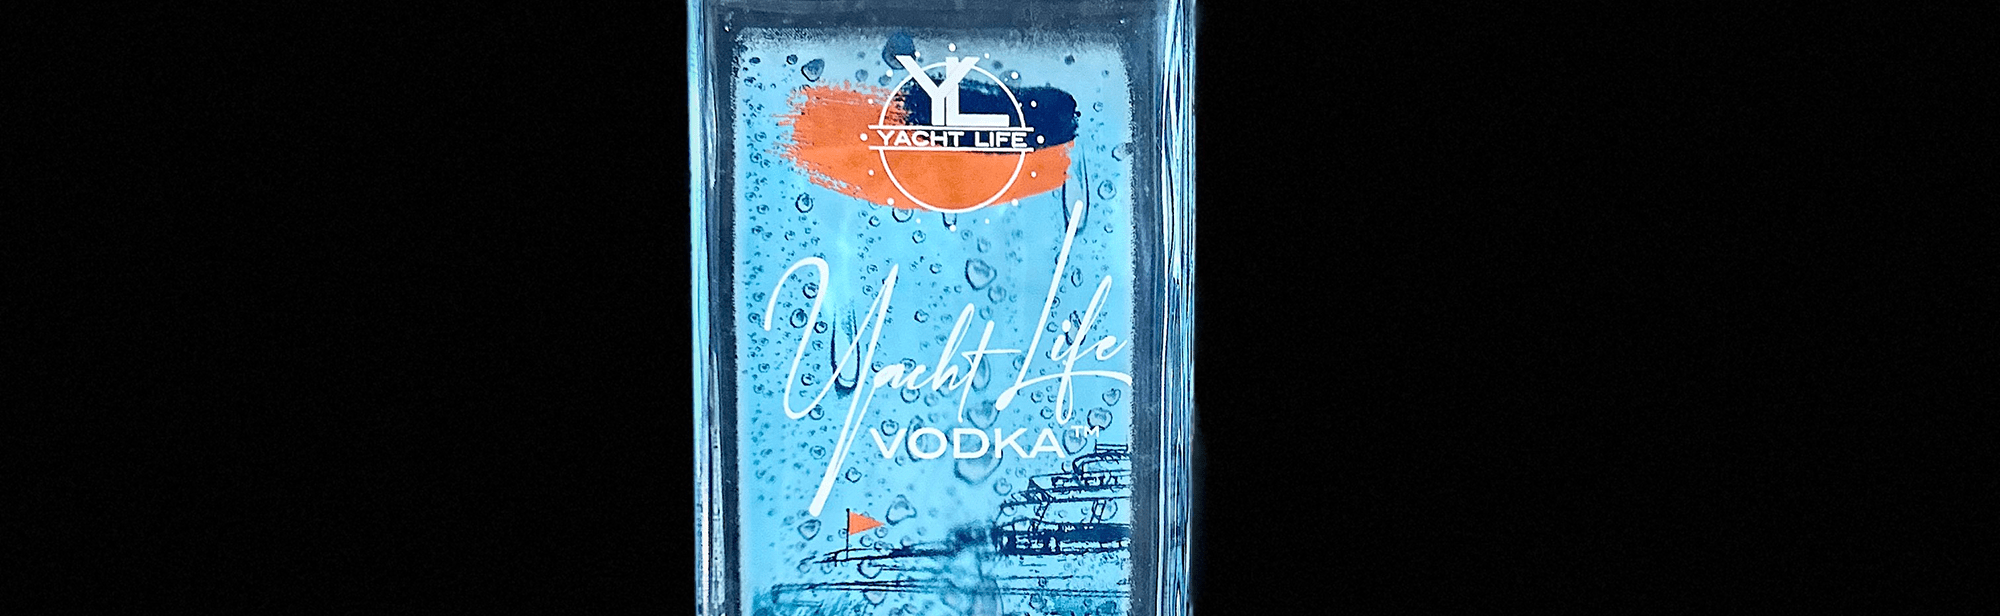 Yacht Life Vodka